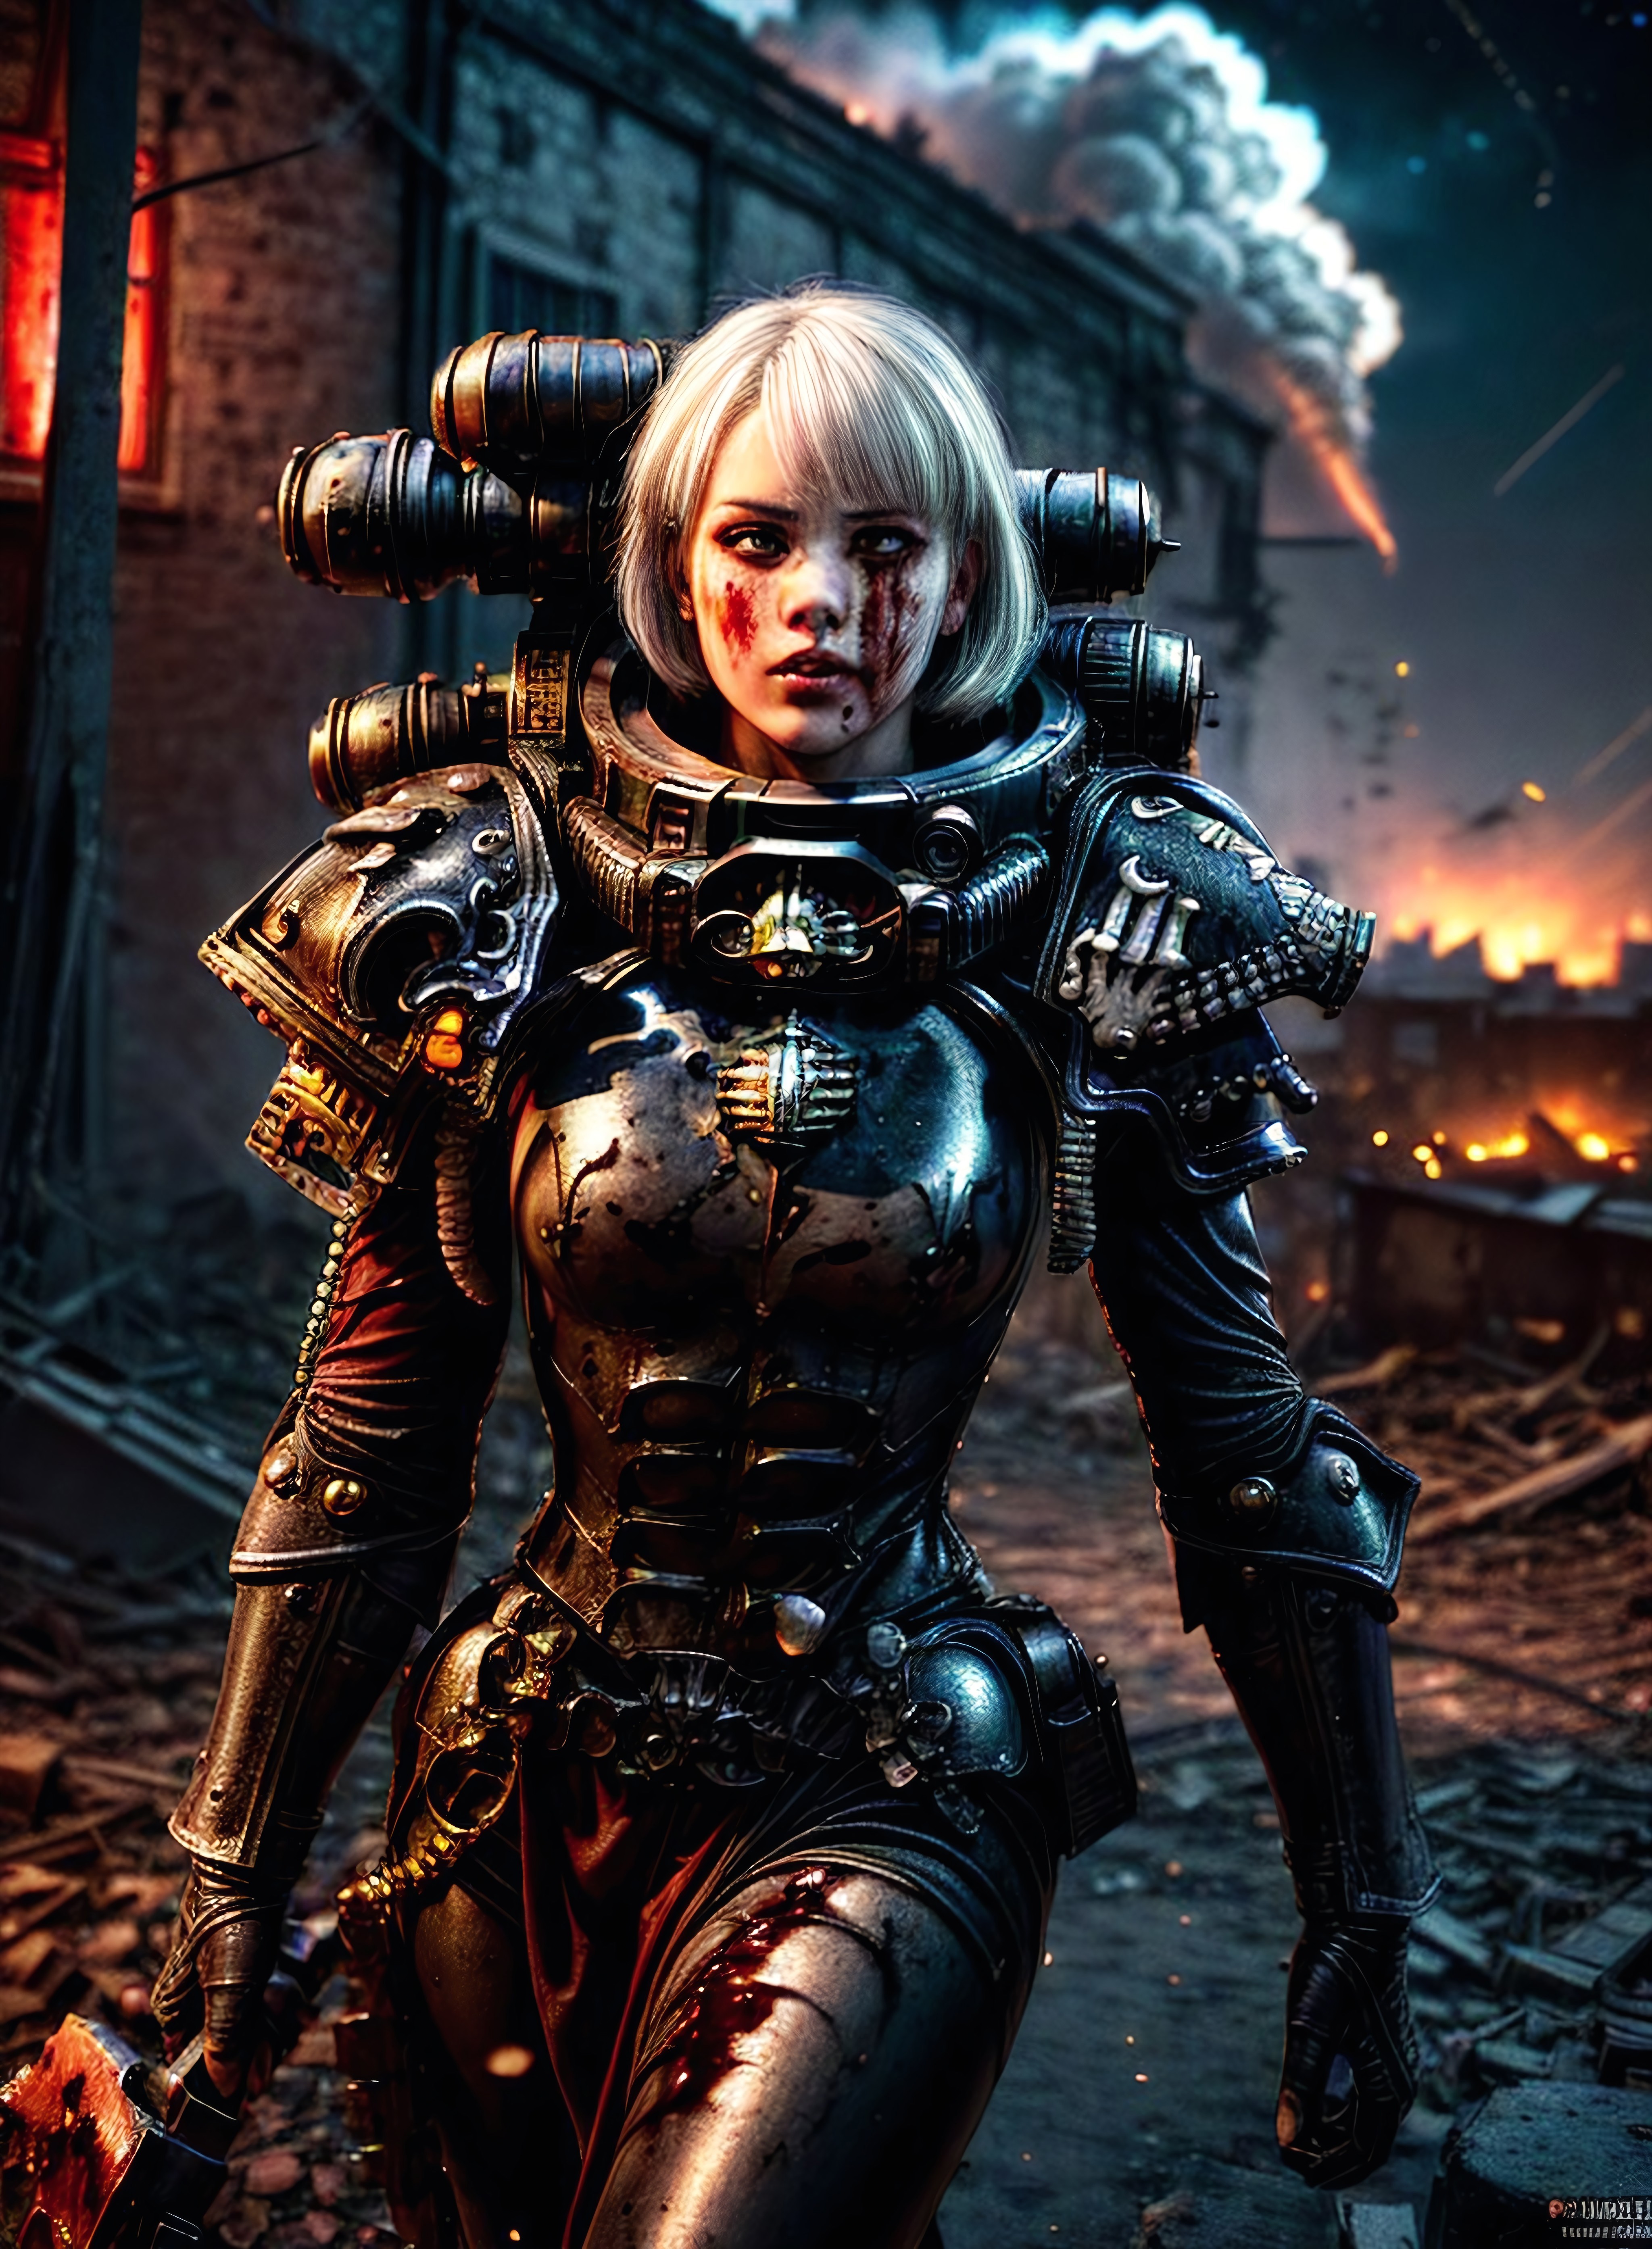 Warhammer 40K Sisters of Battle image by asdgwg